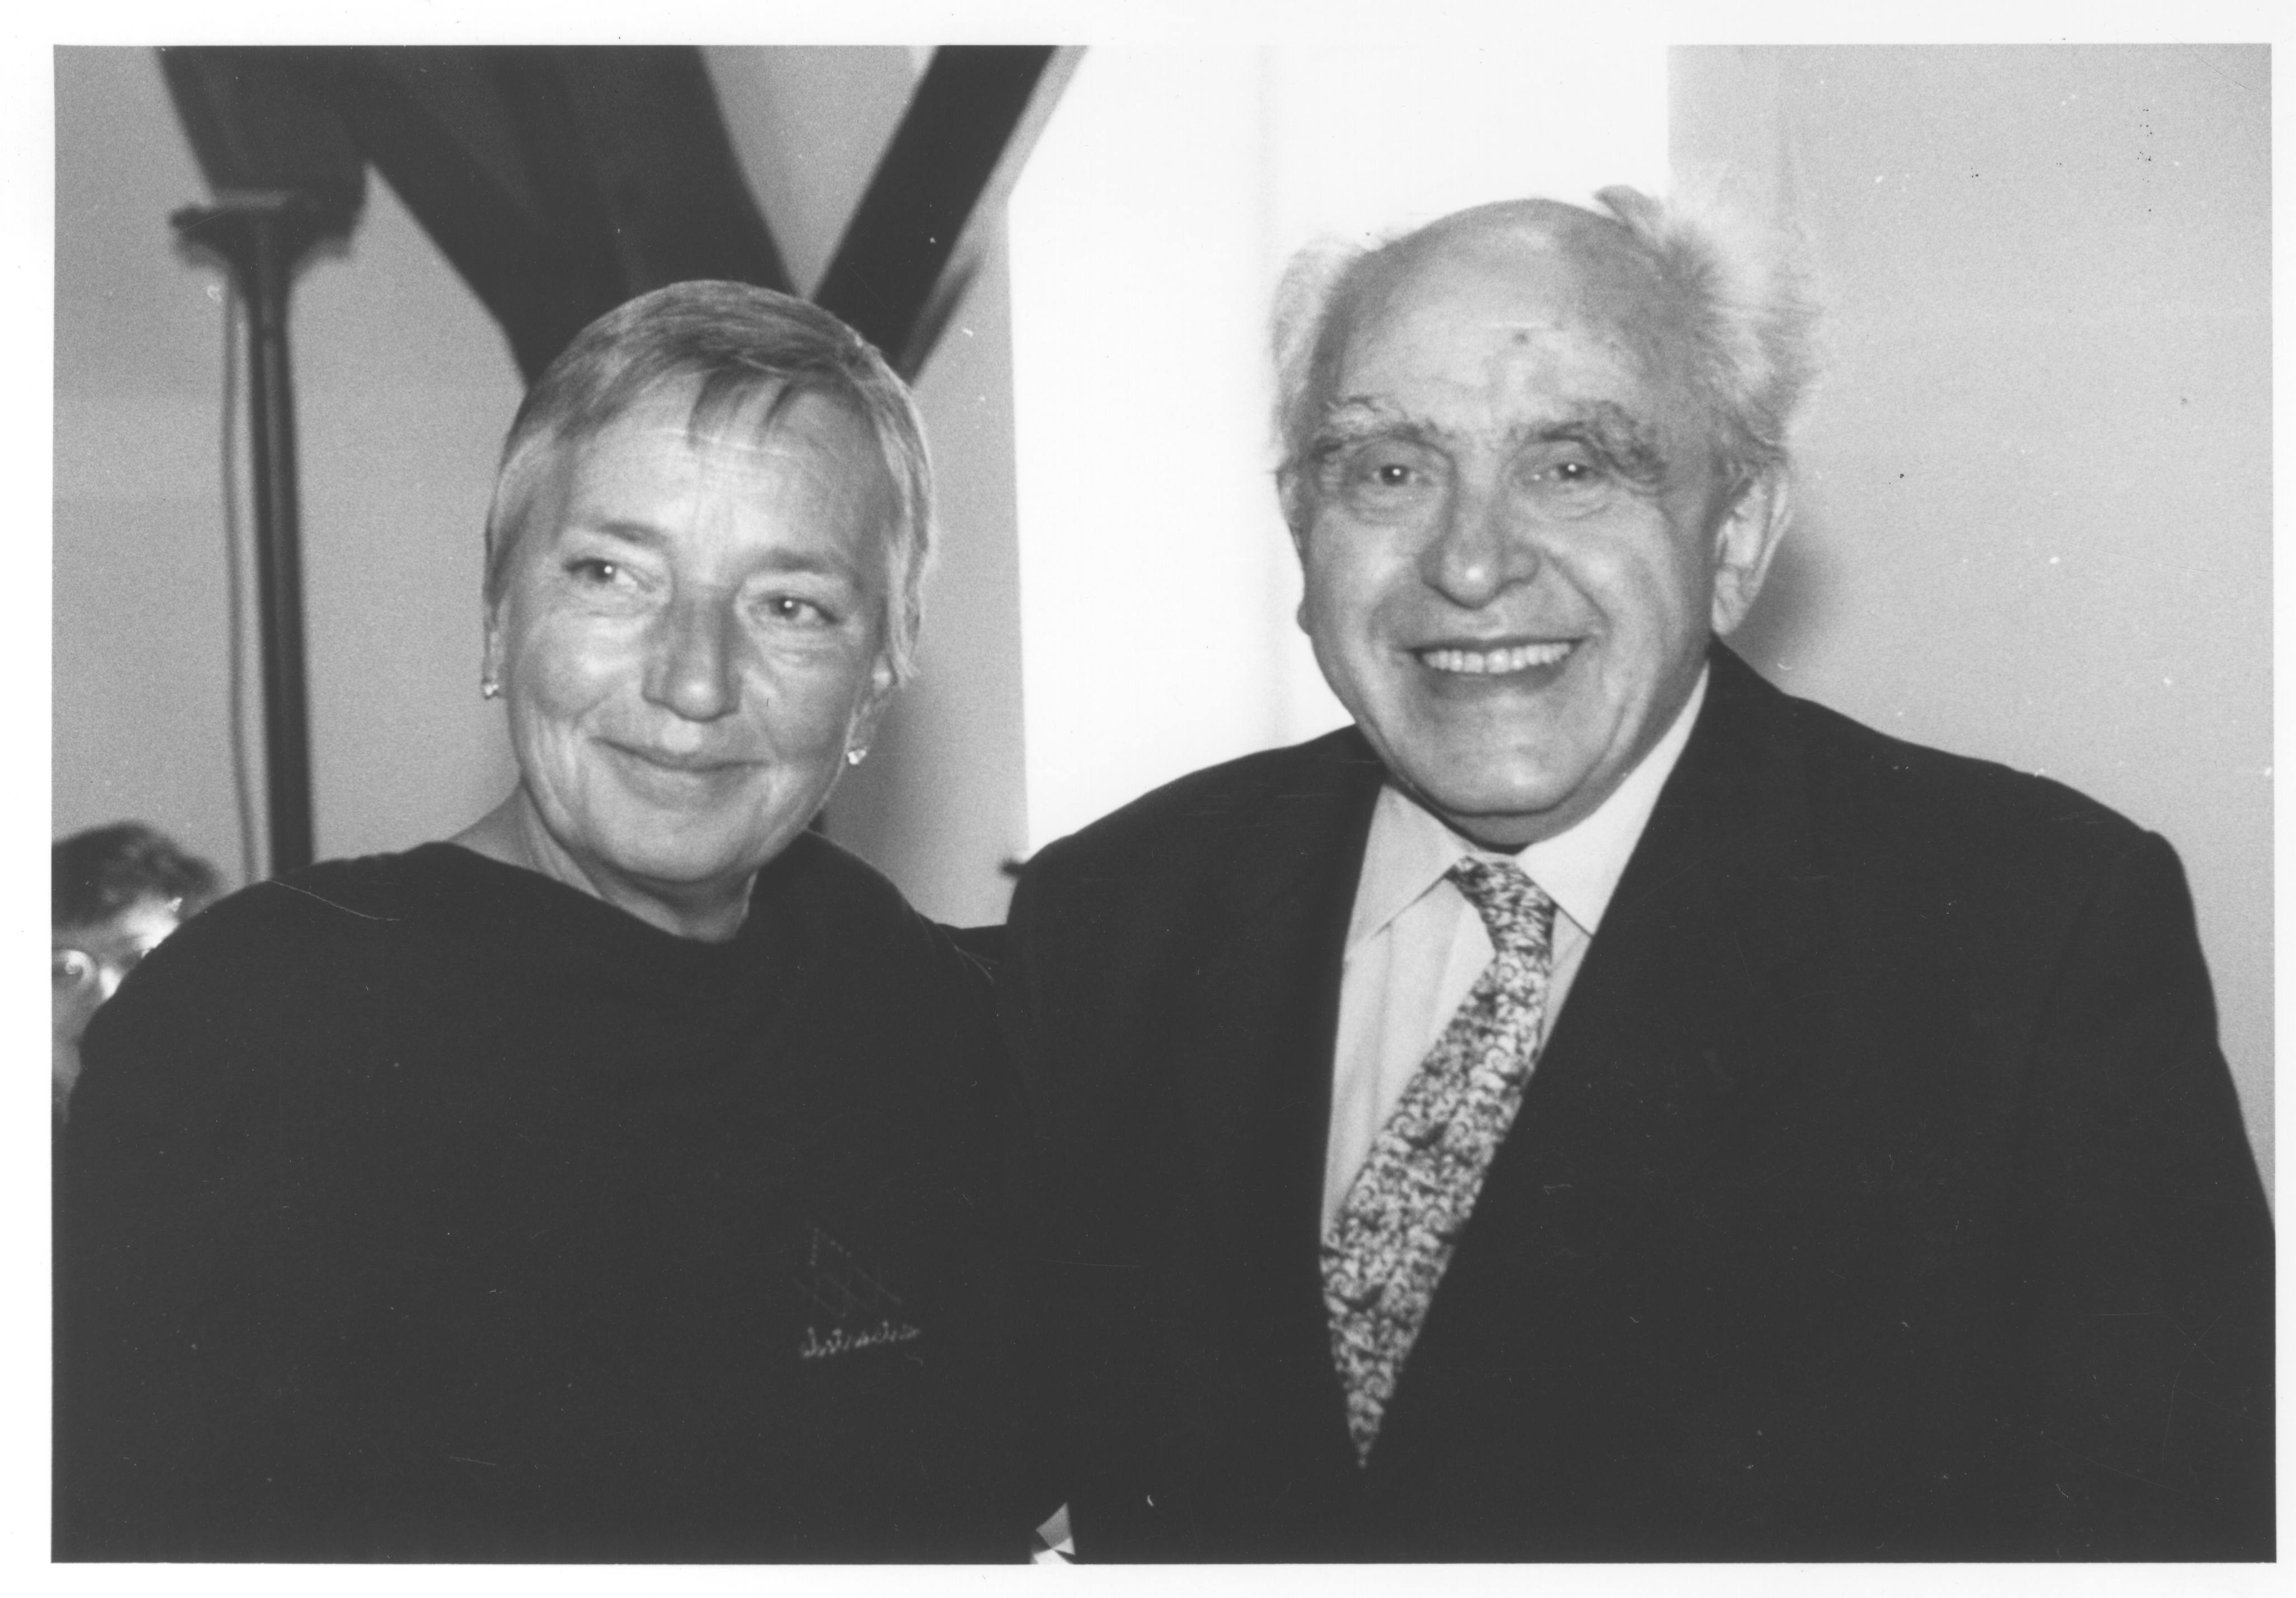 
					
						José Ensch und Edmond Israel, Prix Servais 1998
					
					
					© Armand Gillen
					